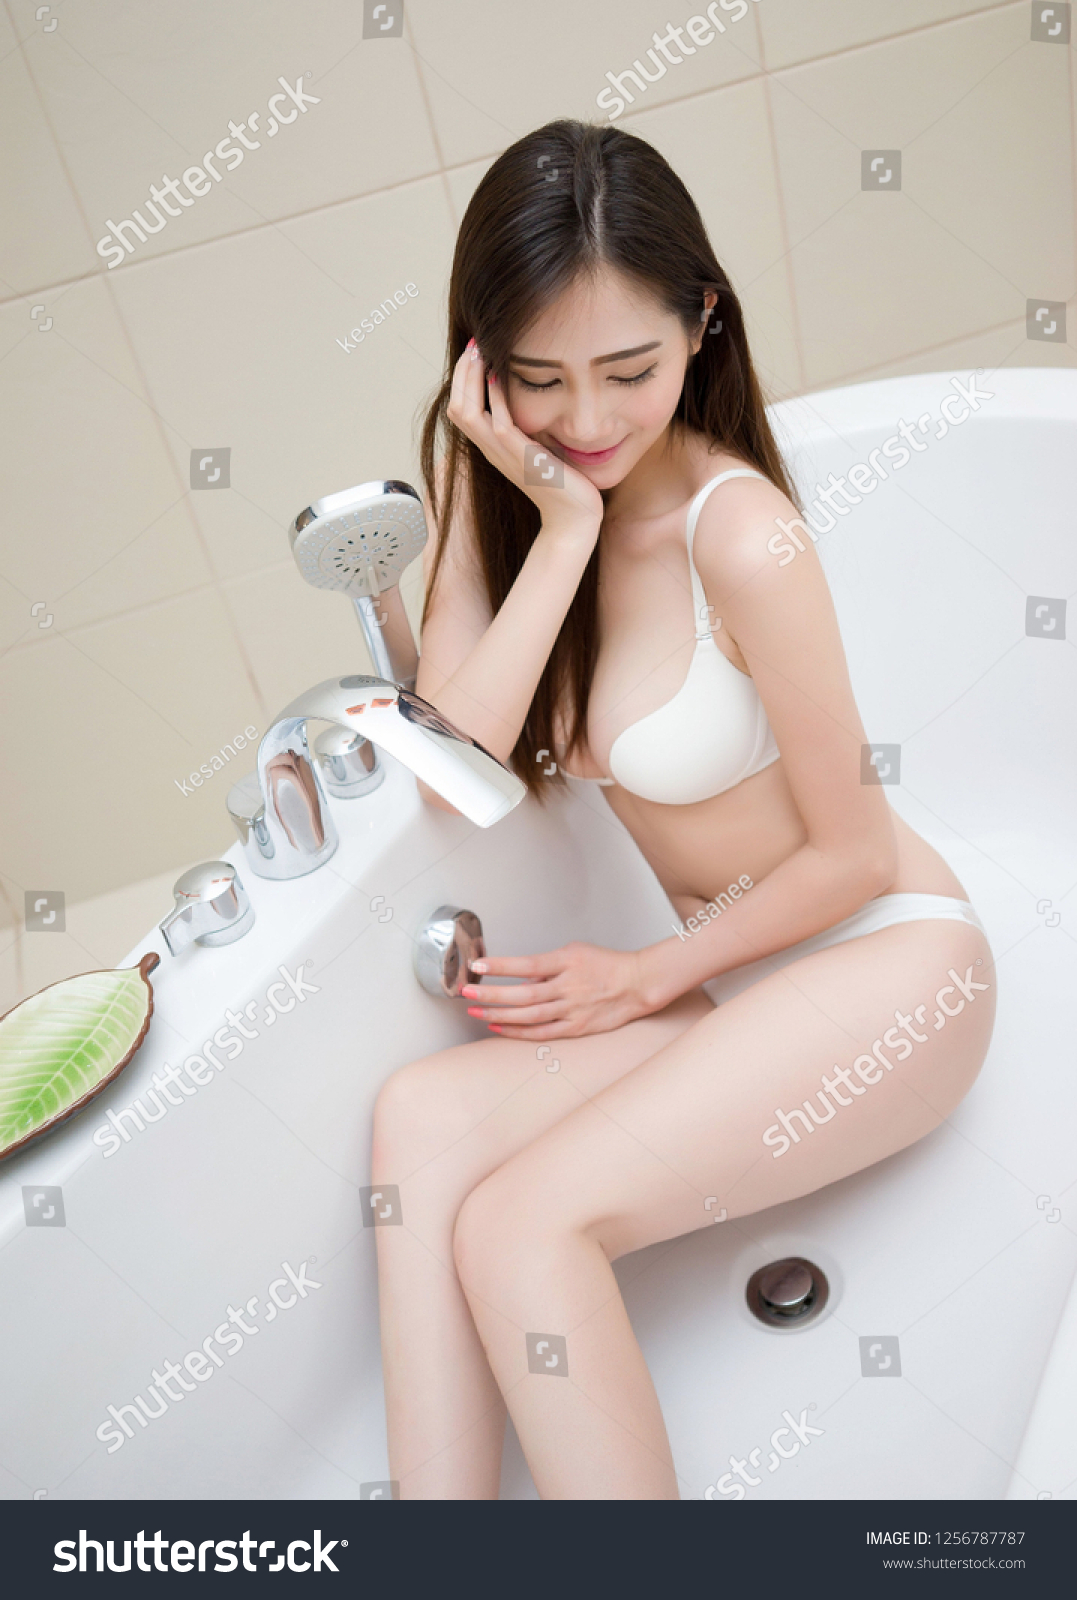 Jpn Cute Porn Nude Cute Boobs Japan Asian Hot Big Boobs